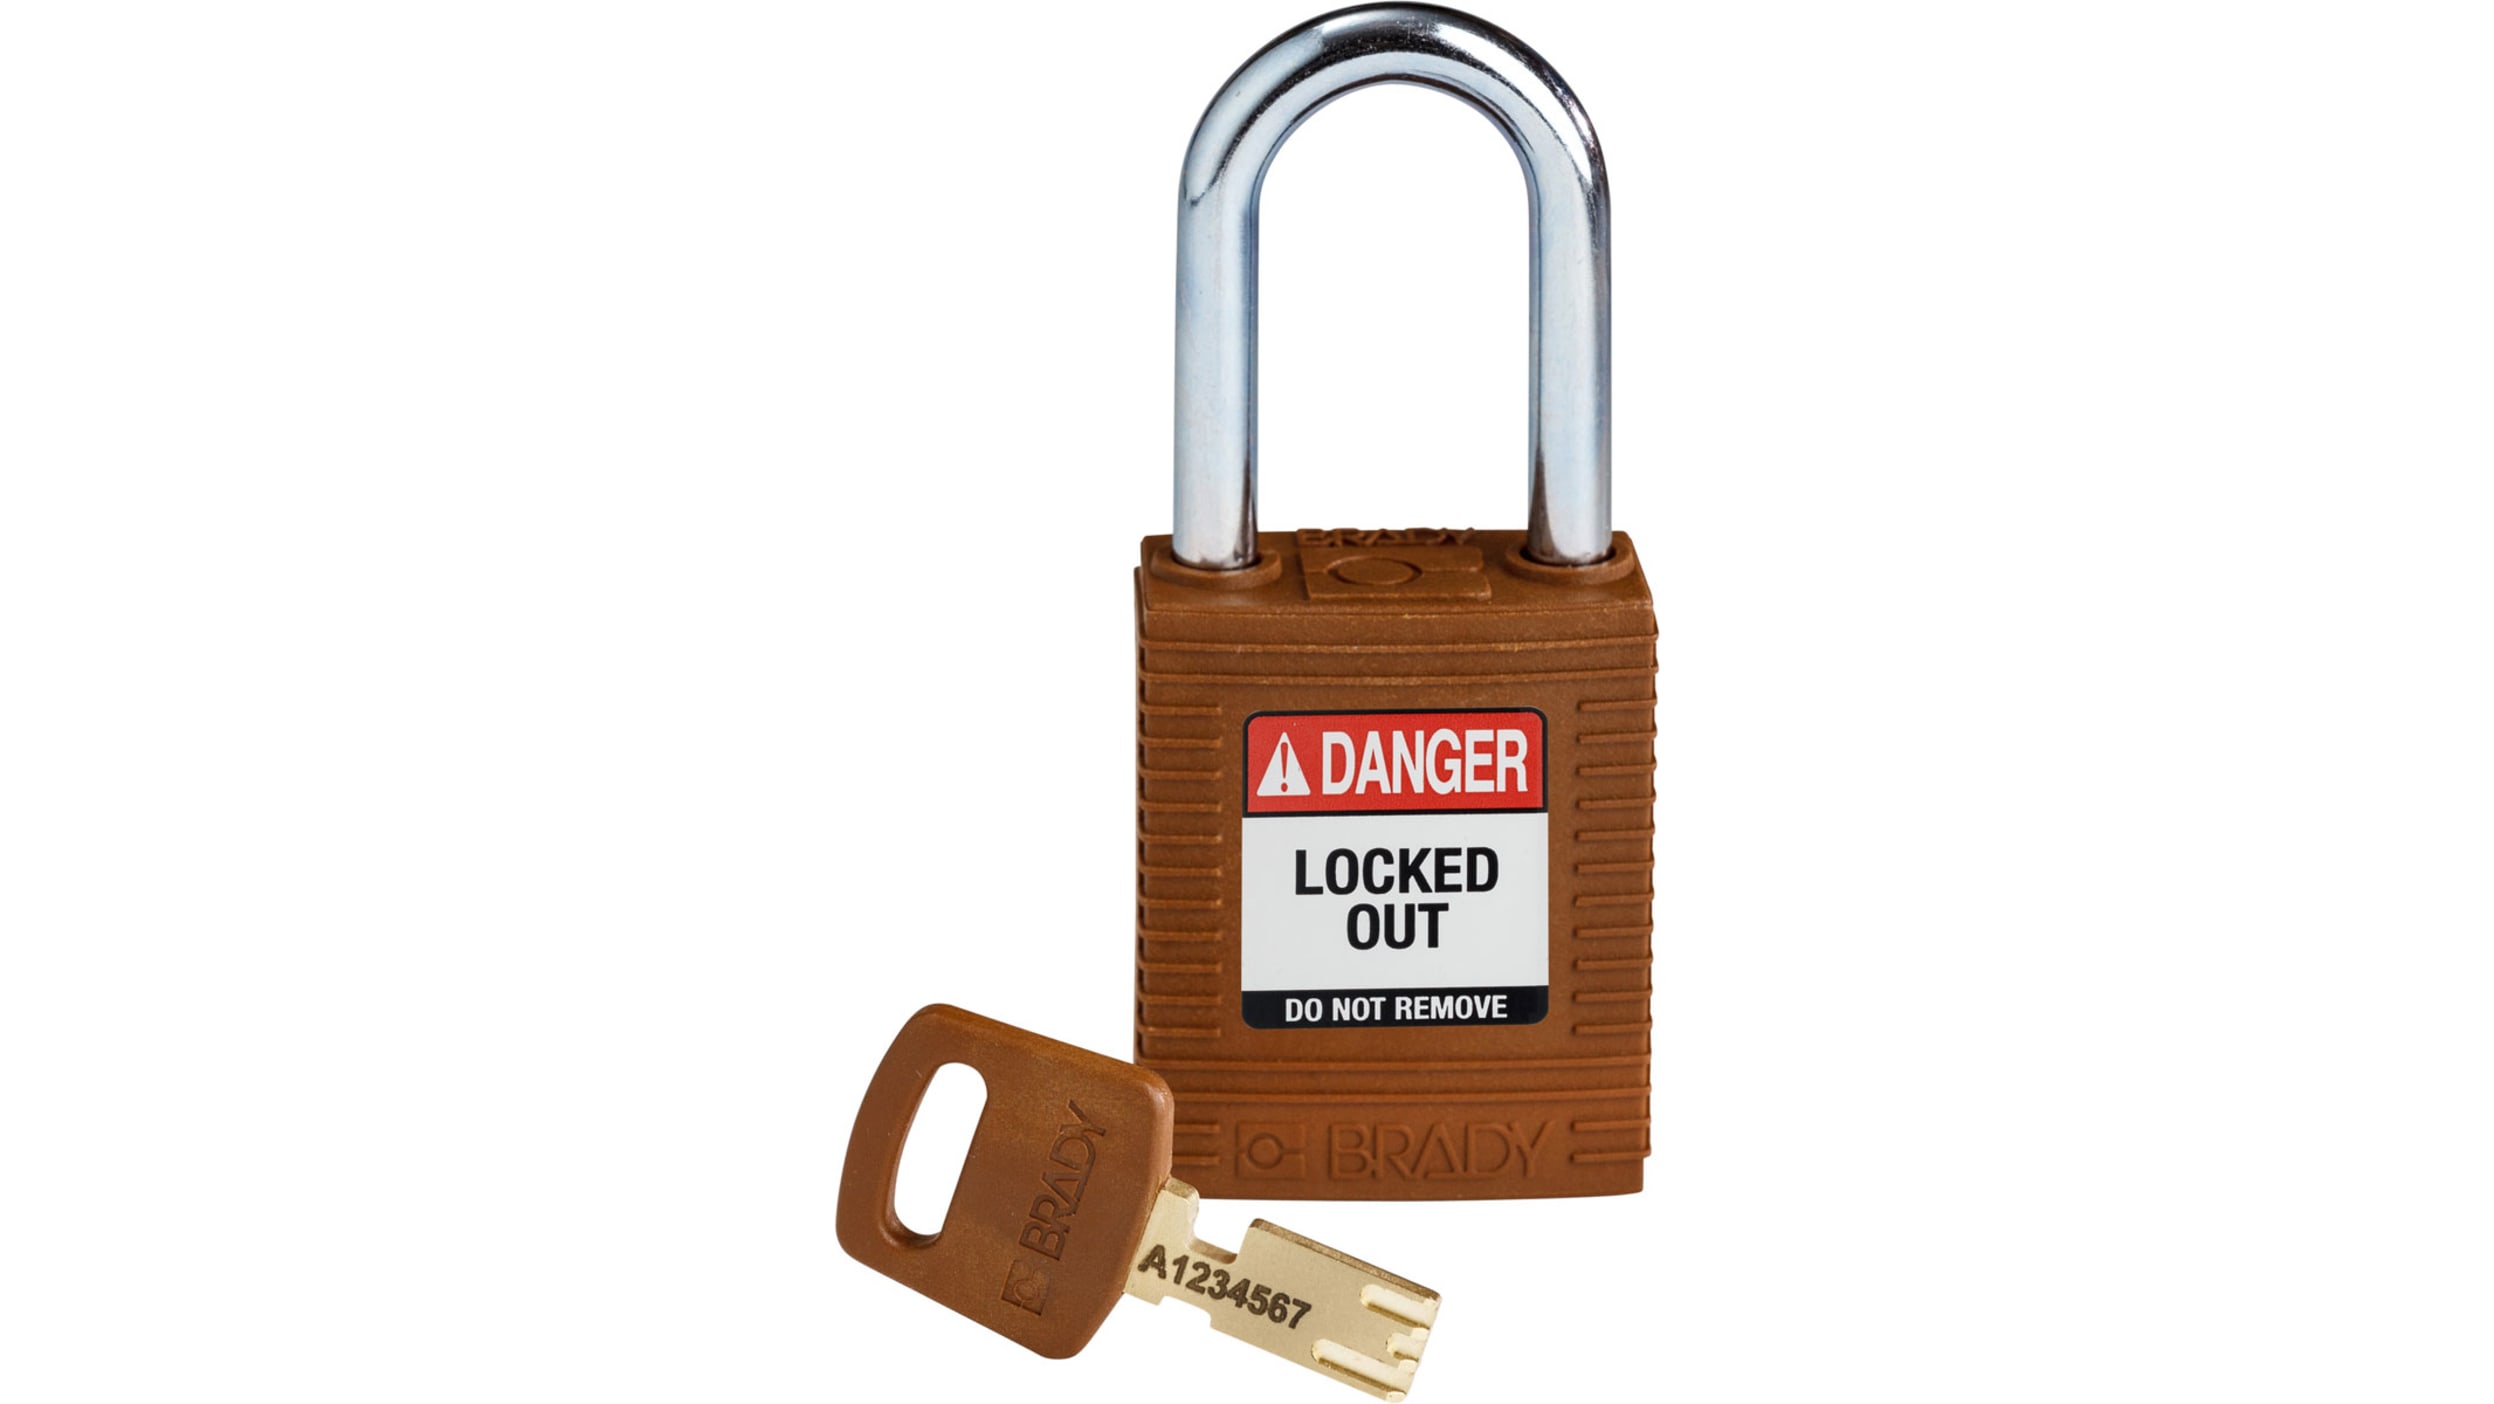 Candados de bloqueo SafeKey de Brady - Seguridad Laboral